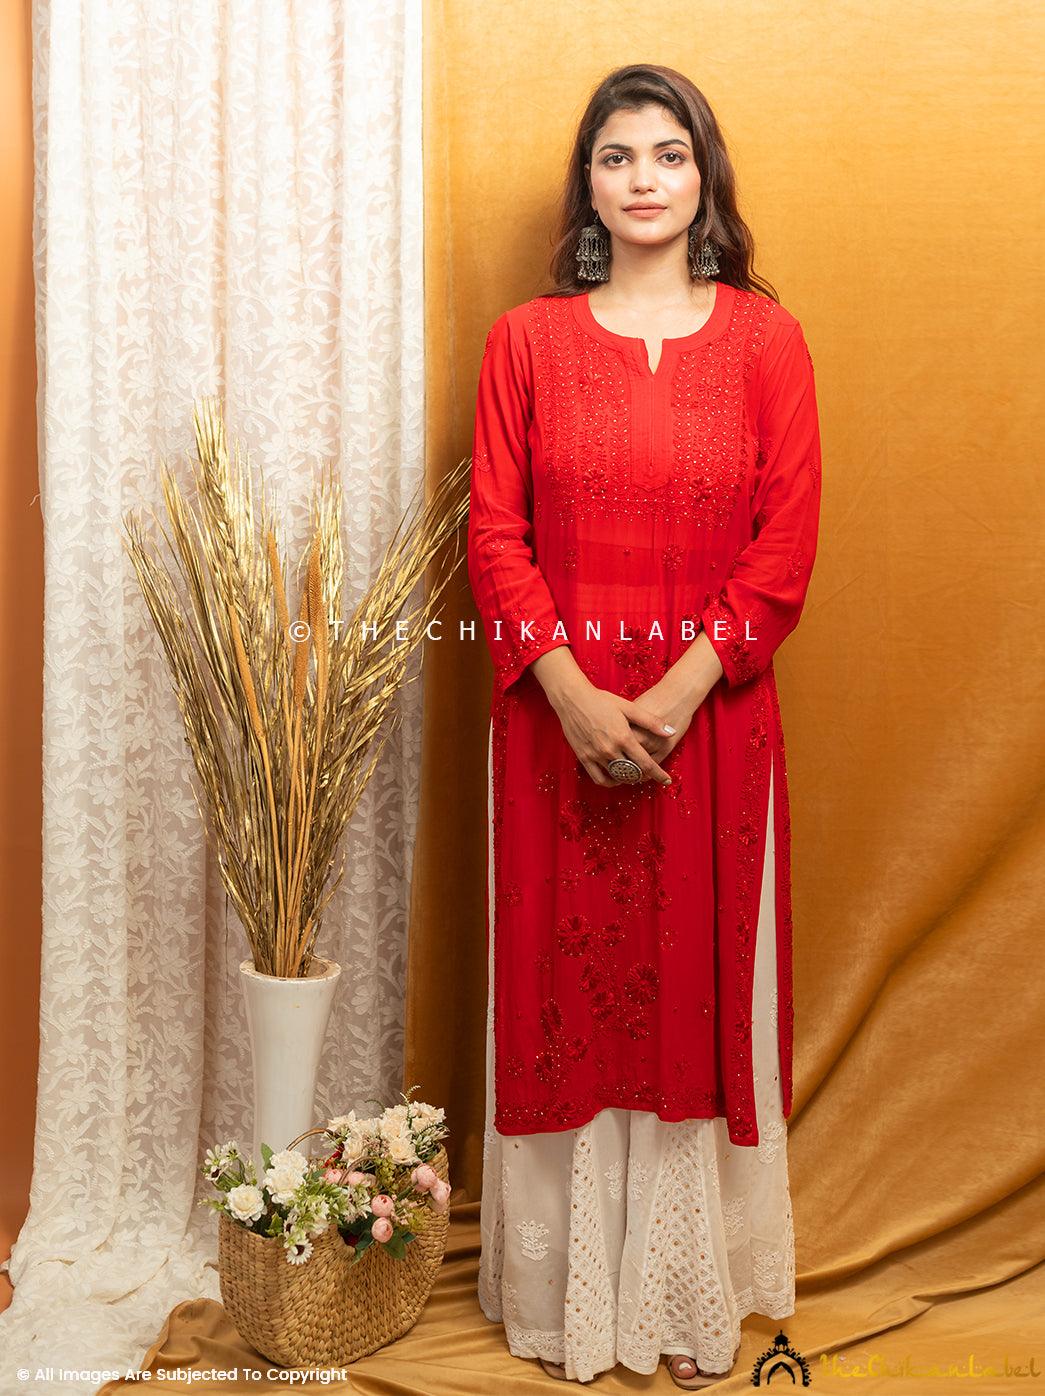 Buy Chikankari Straight Kurti in Viscose Fabric for Women, Shop Authentic Lucknow Chikankari Straight Kurtis Online at Best Price Only at Thechikanlabel.